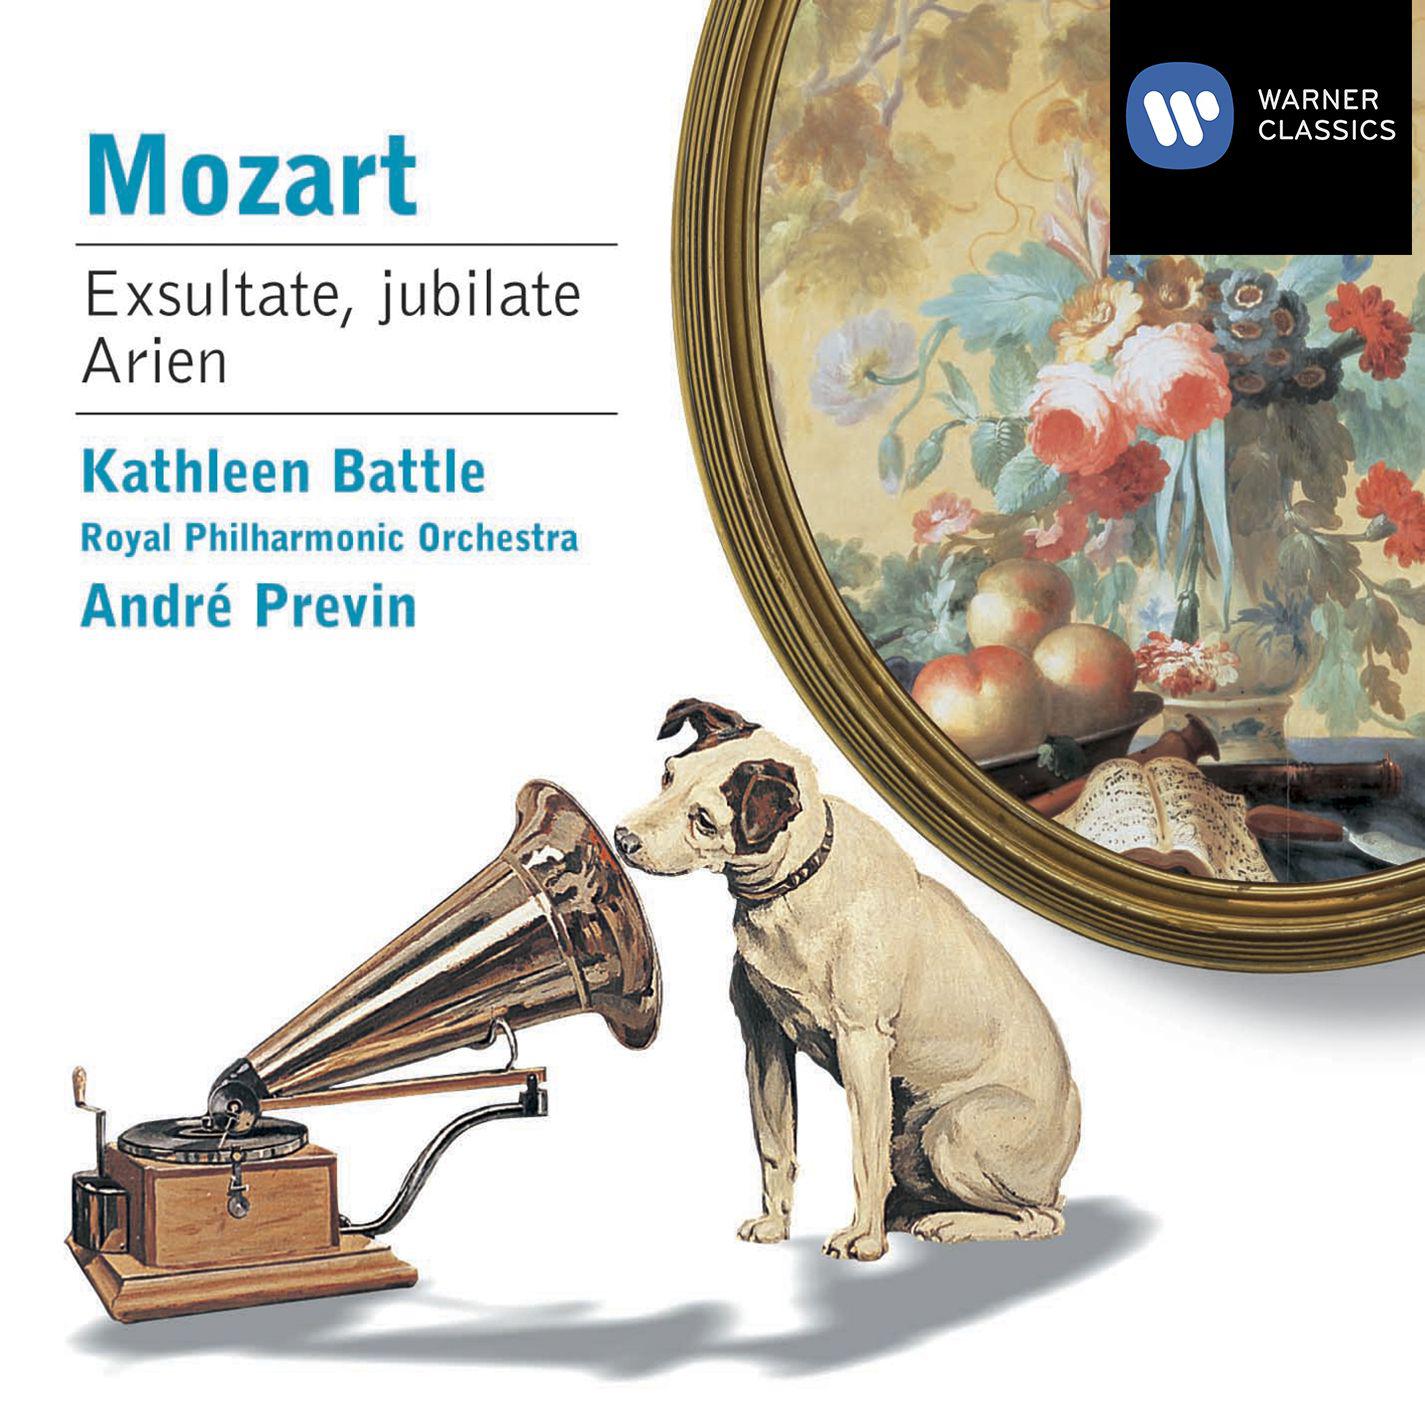 Mozart: Exultate jubilate - Arias